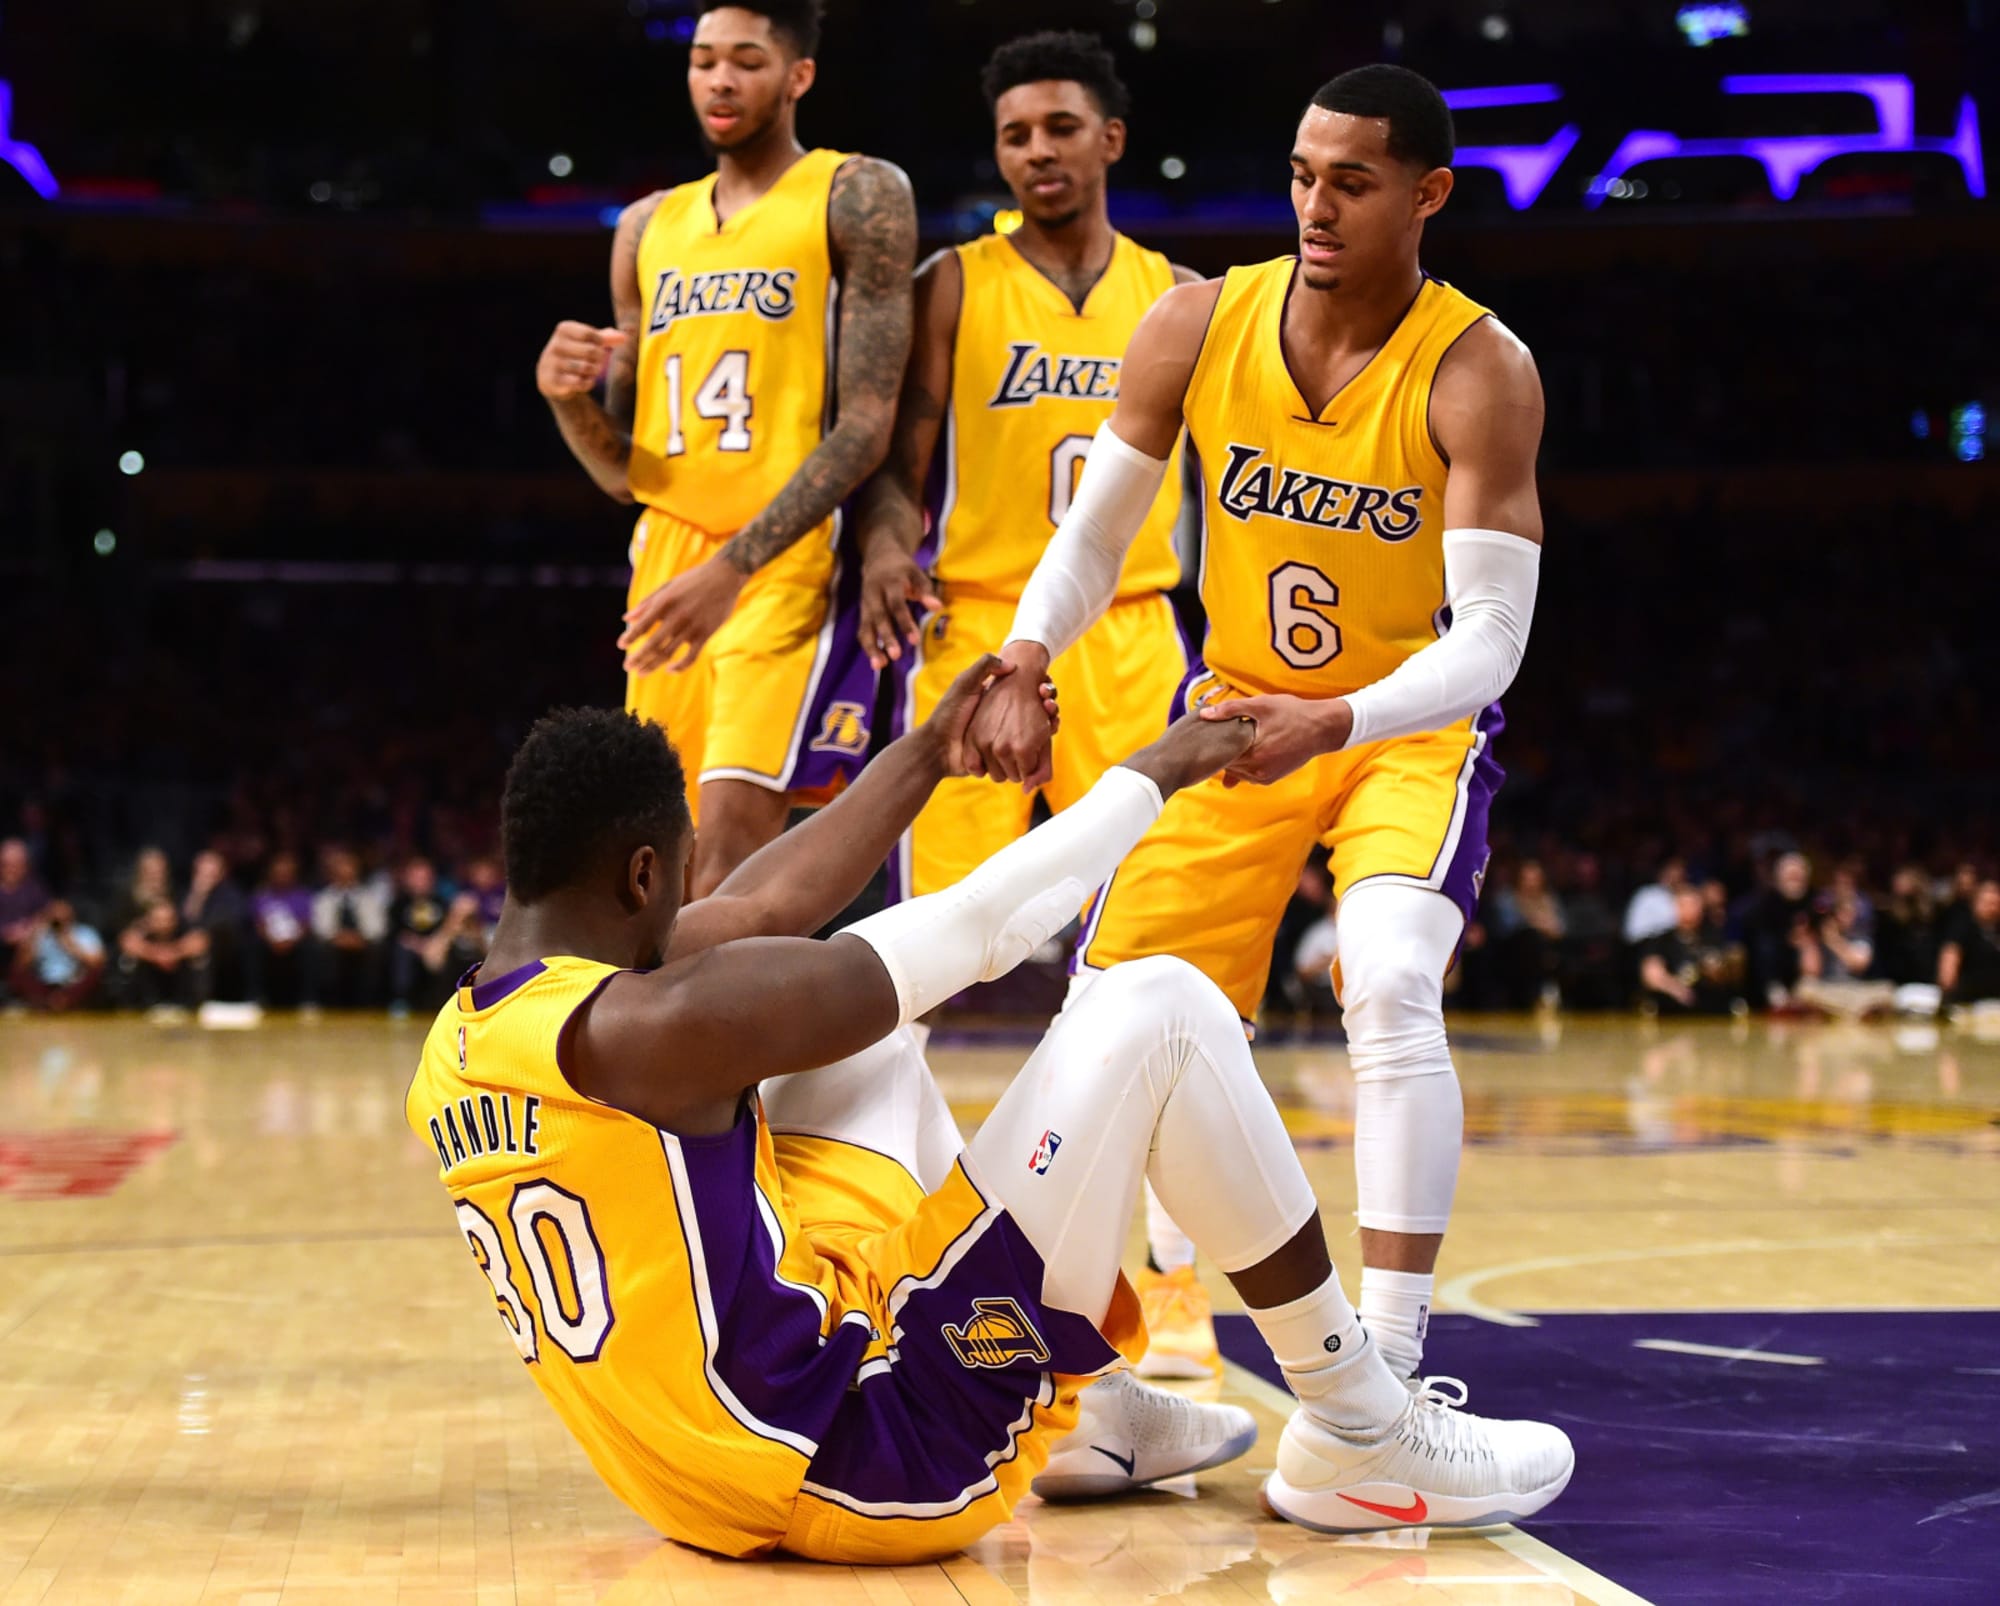 Lakers Alternate Timeline A Team of Lakers' draft picks